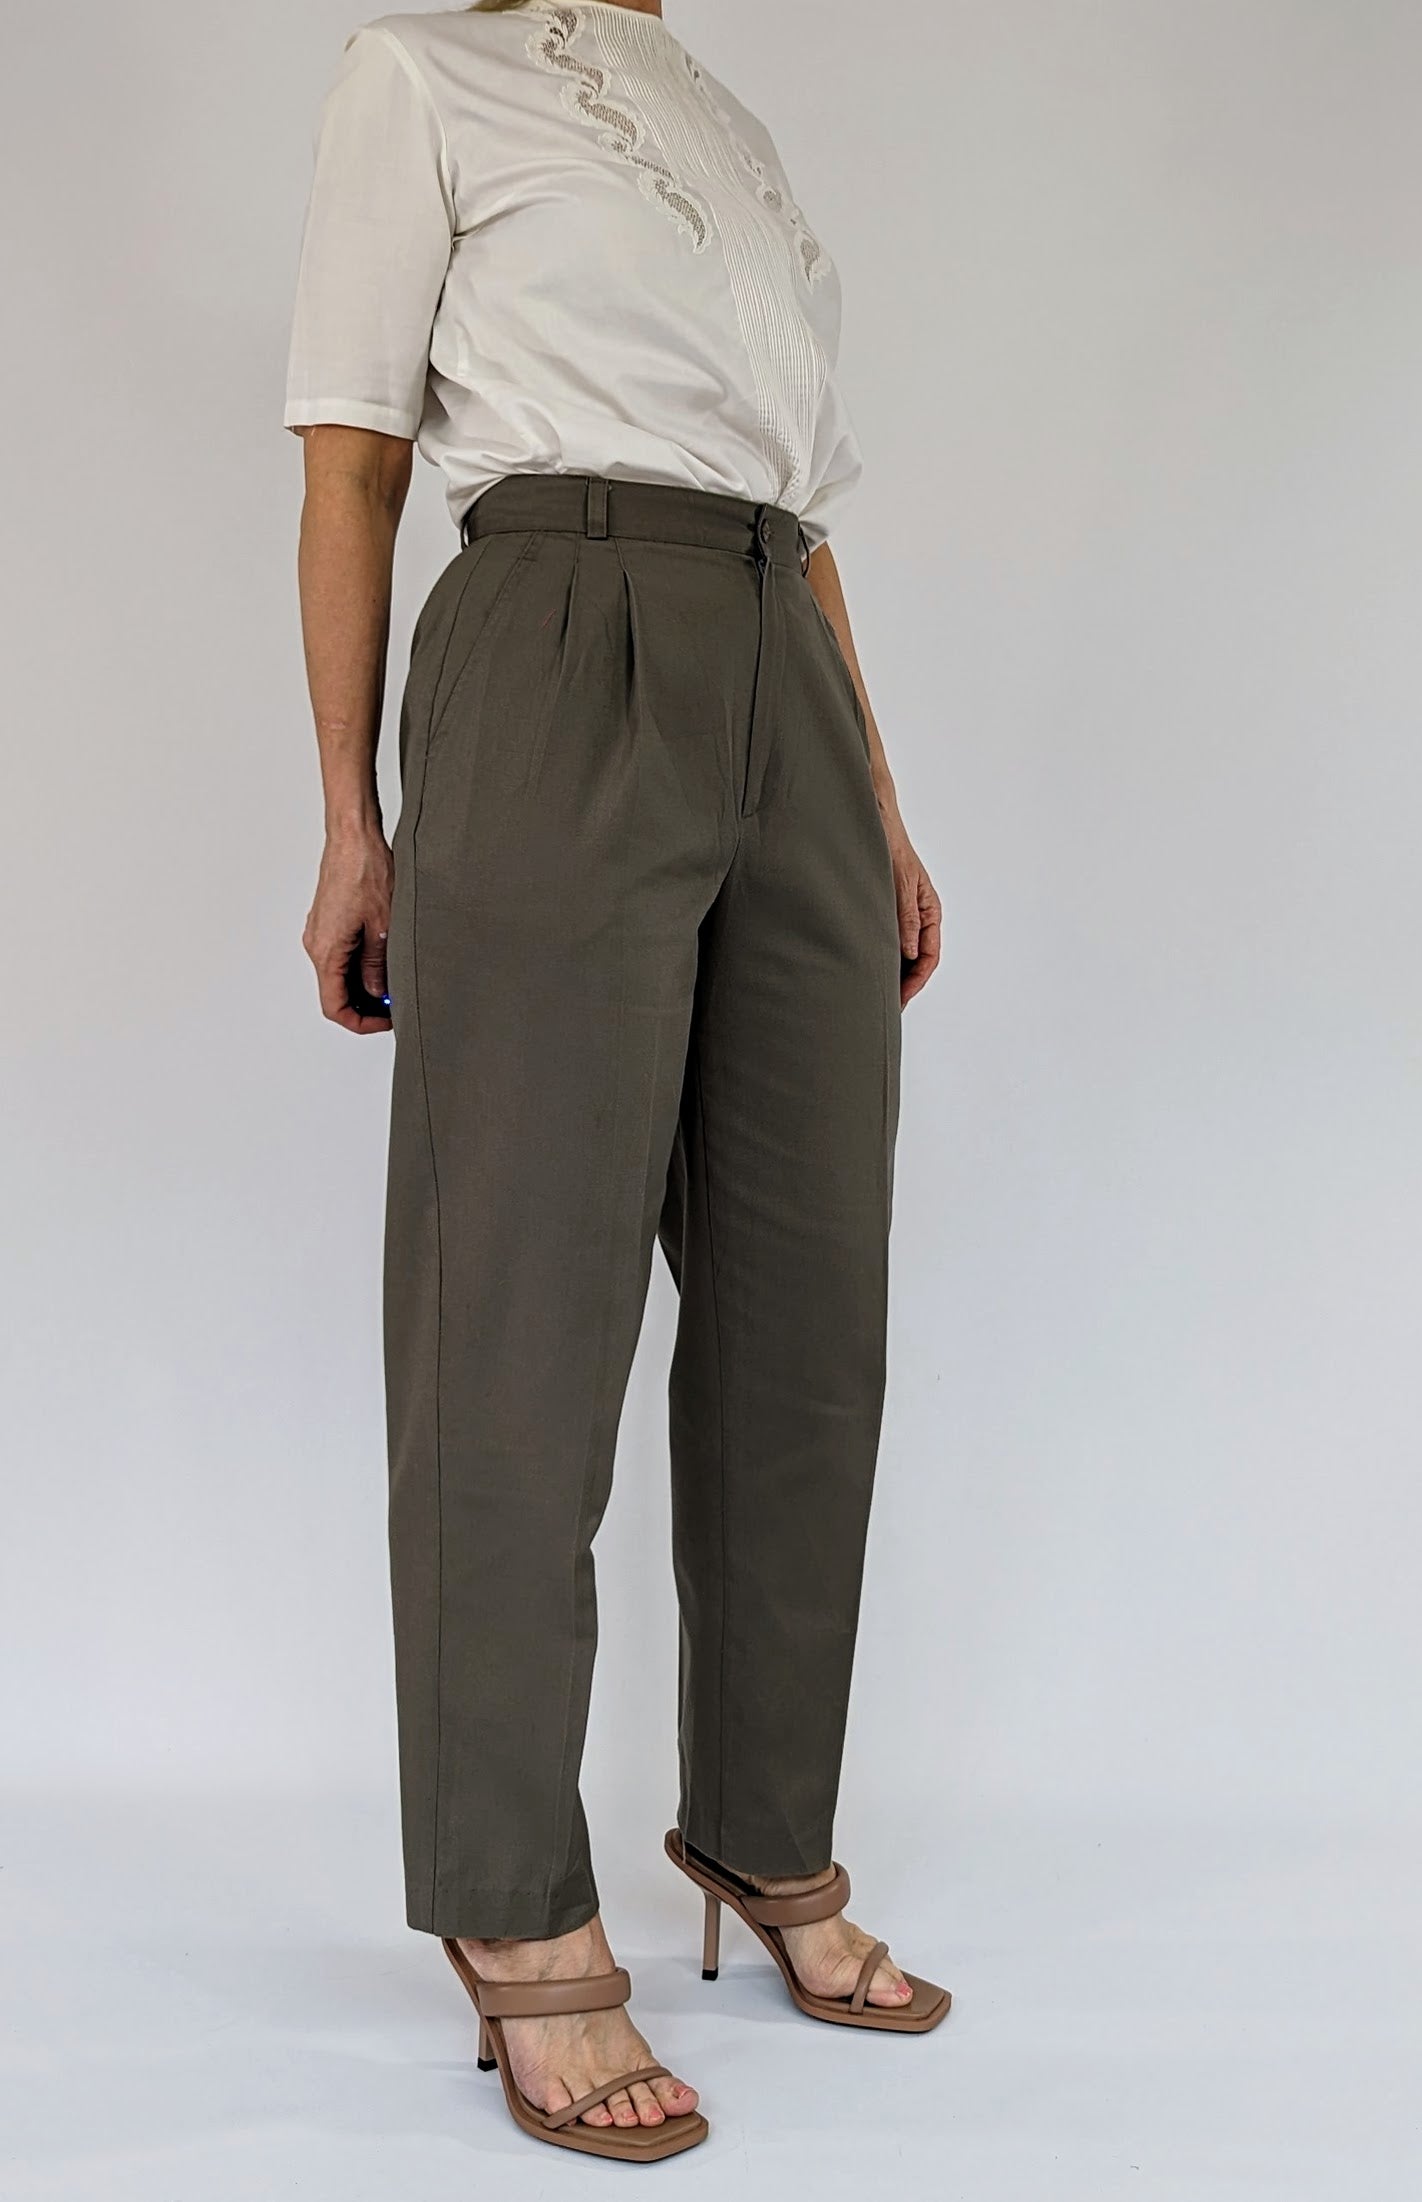 Beige smart vintage trousers